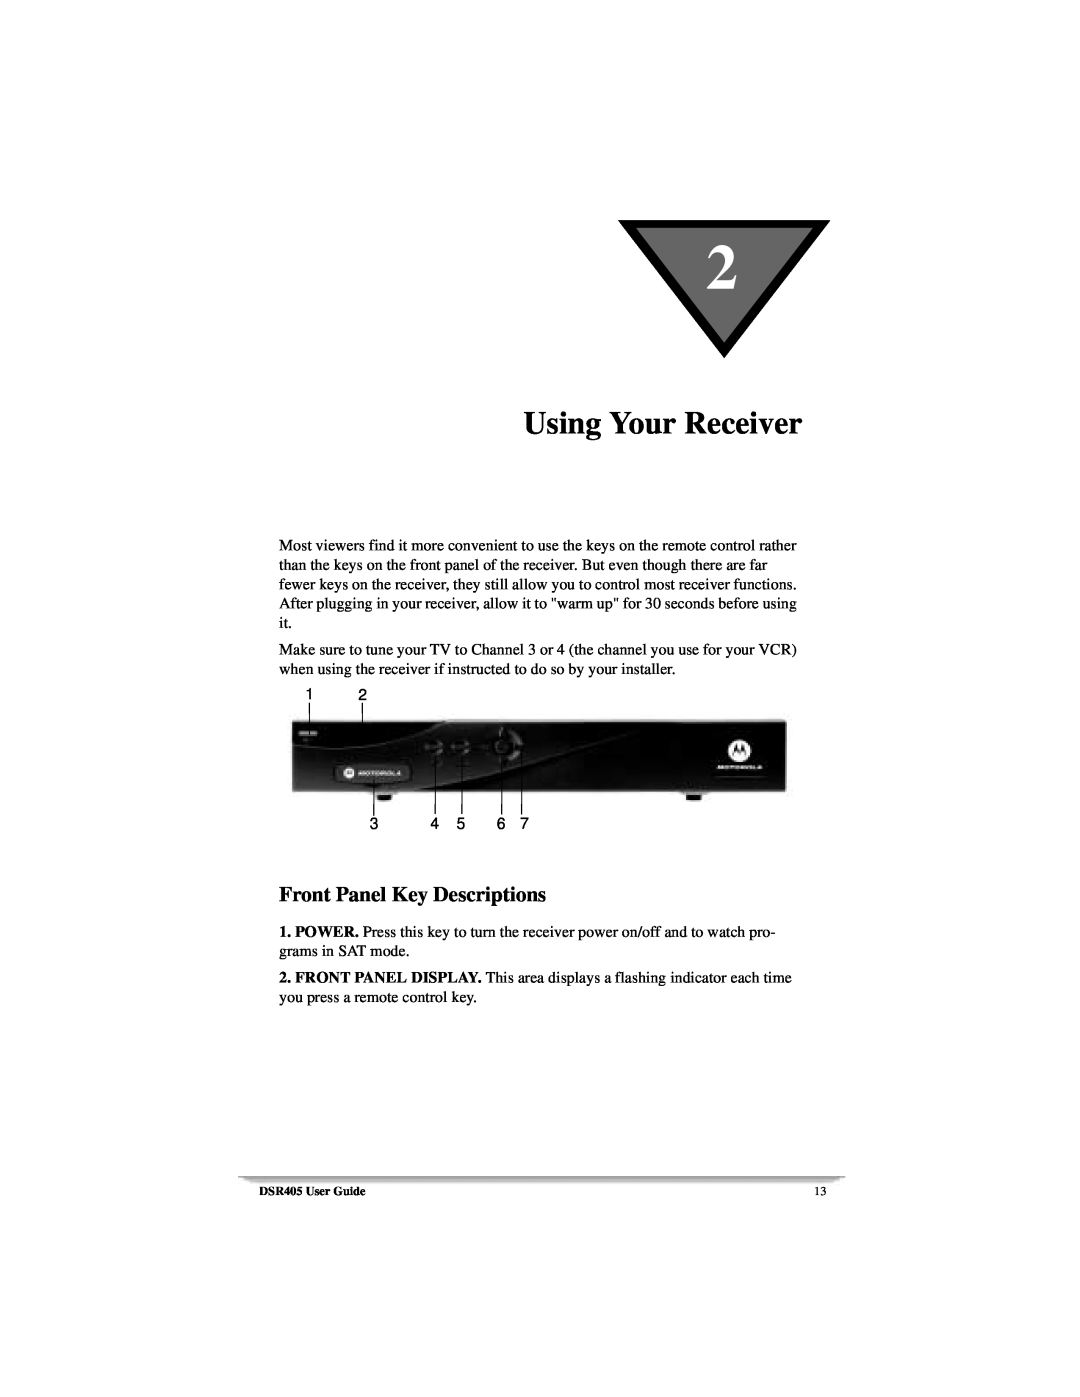 Motorola DSR405 manual Using Your Receiver, Front Panel Key Descriptions 